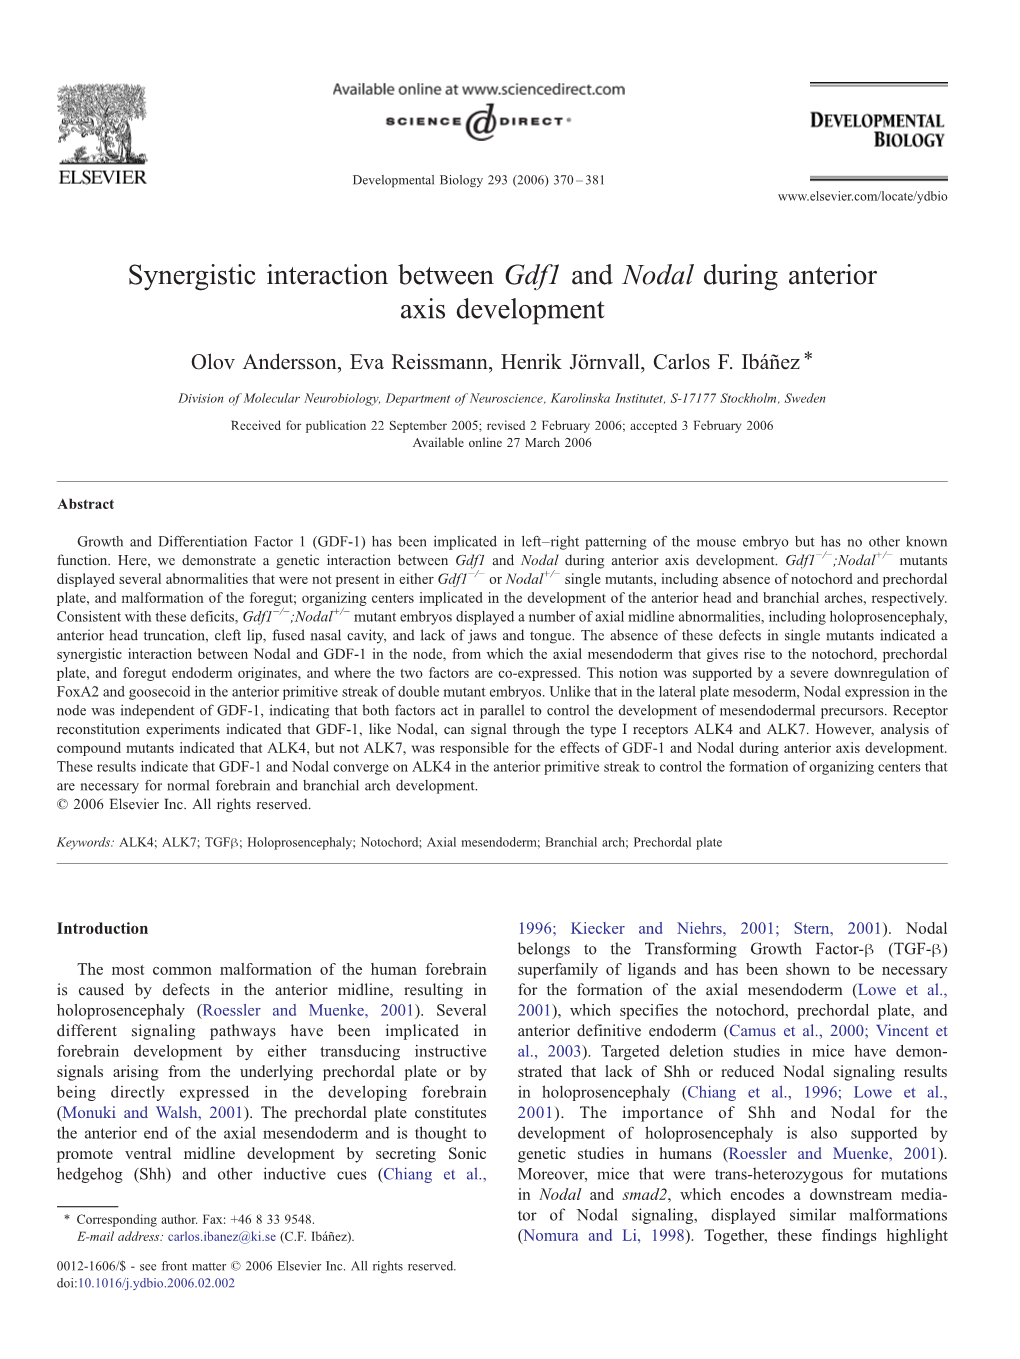 Synergistic Interaction Between Gdf1 and Nodal During Anterior Axis Development ⁎ Olov Andersson, Eva Reissmann, Henrik Jörnvall, Carlos F